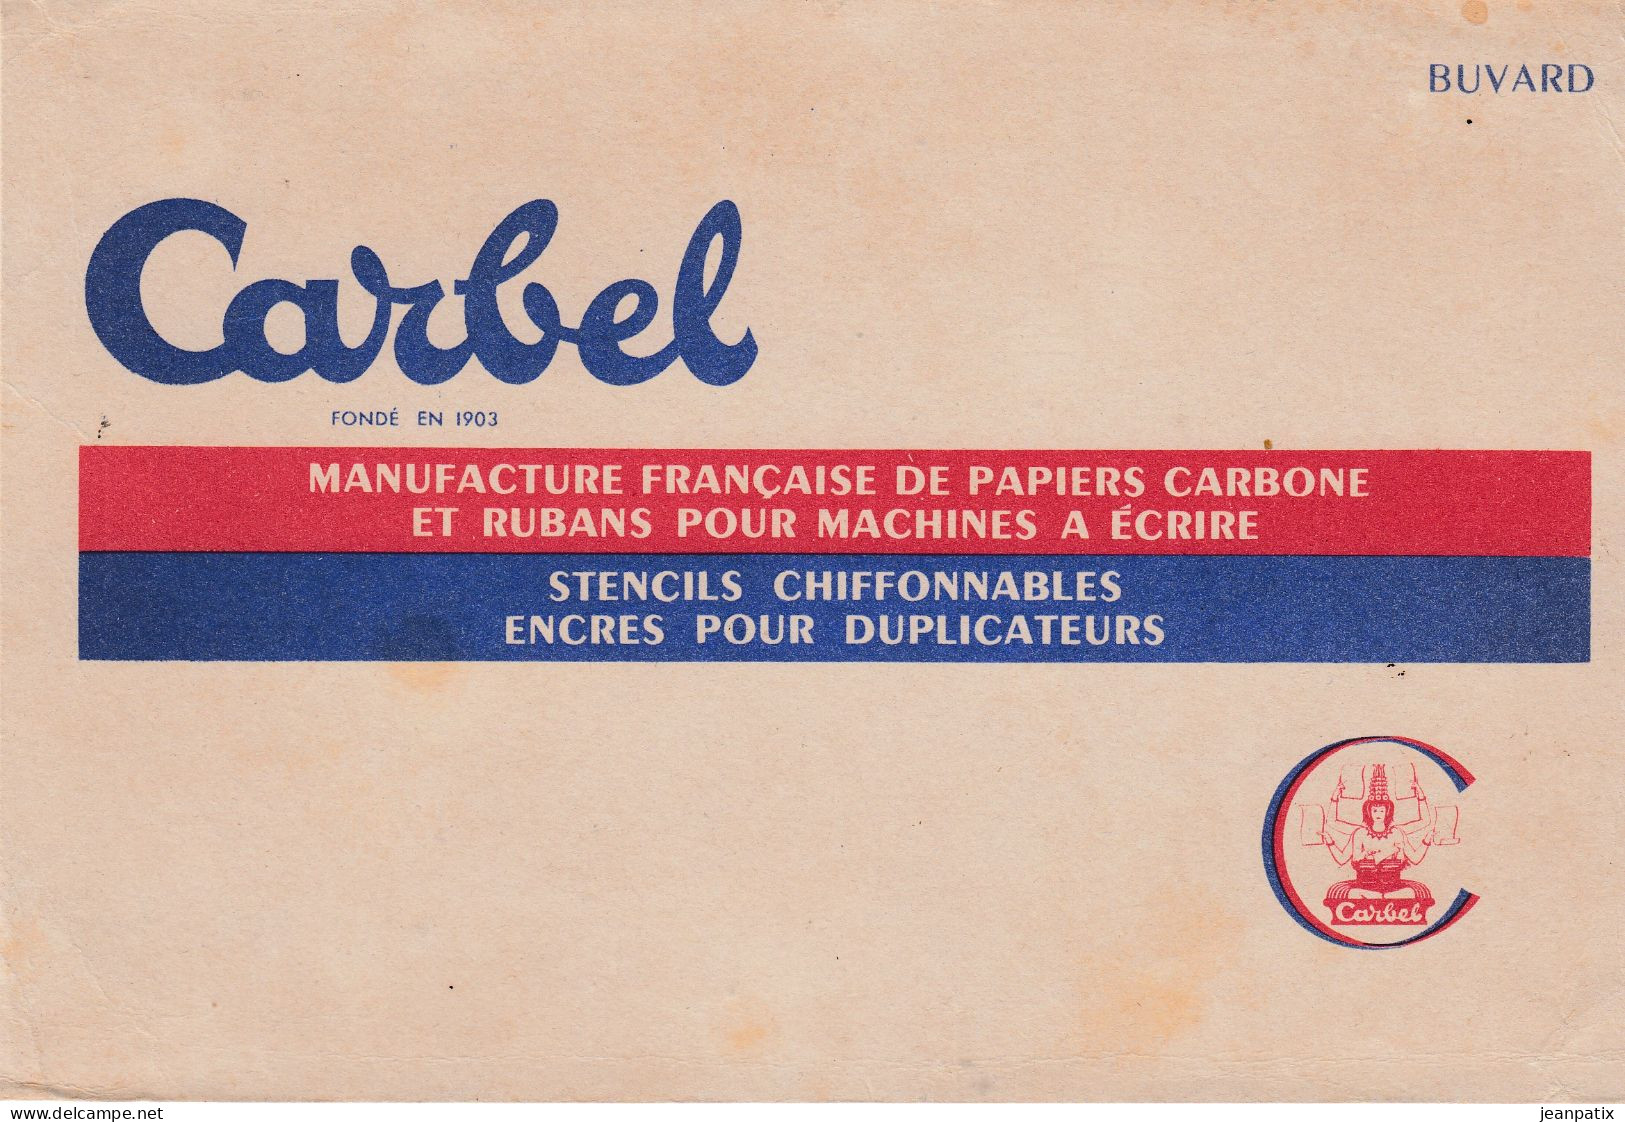 BUVARD & BLOTTER - CARBEL - Manufacture De Papier Carbone Our Machine à écrire - Kakao & Schokolade